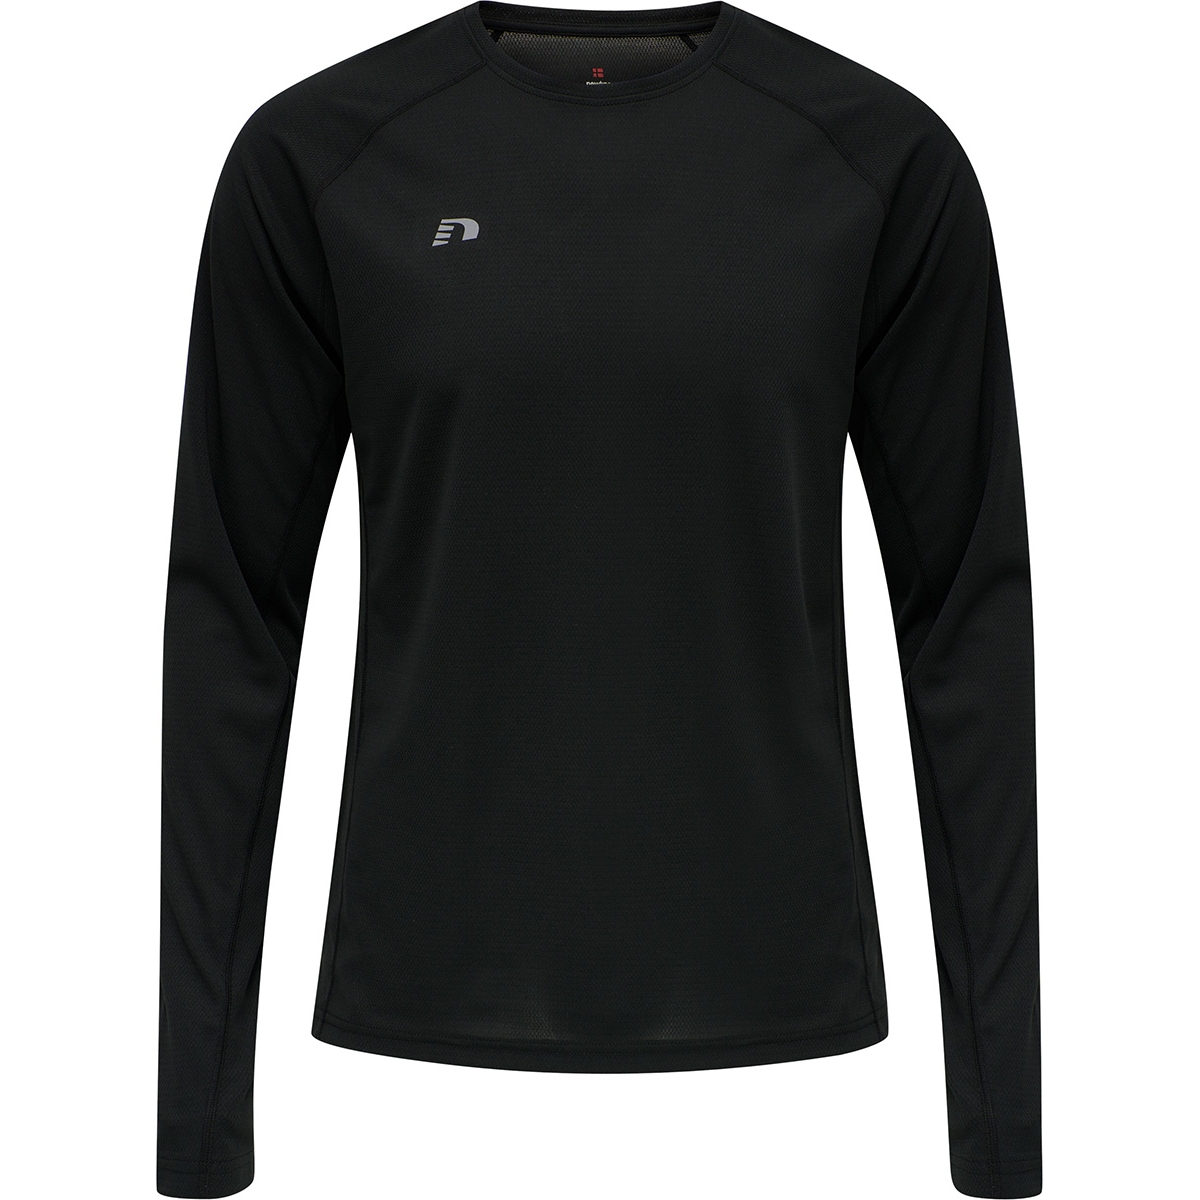 Productfoto van Newline Core Running Longsleeve Shirt - black